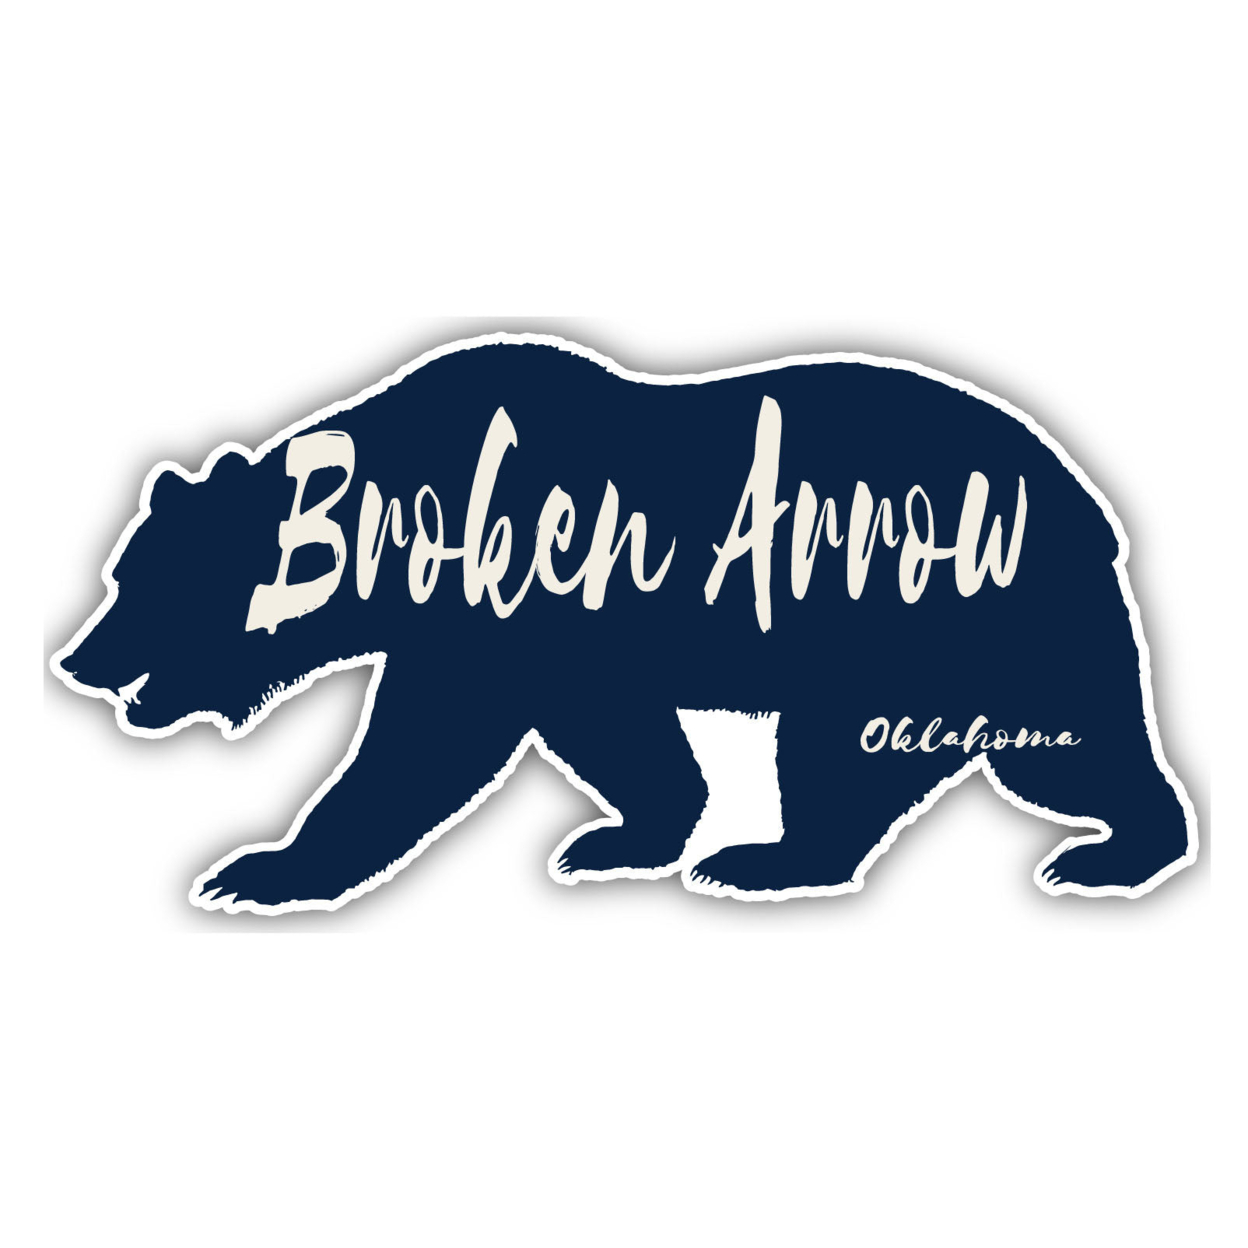 Broken Arrow Oklahoma Souvenir Decorative Stickers (Choose Theme And Size) - 4-Pack, 2-Inch, Bear